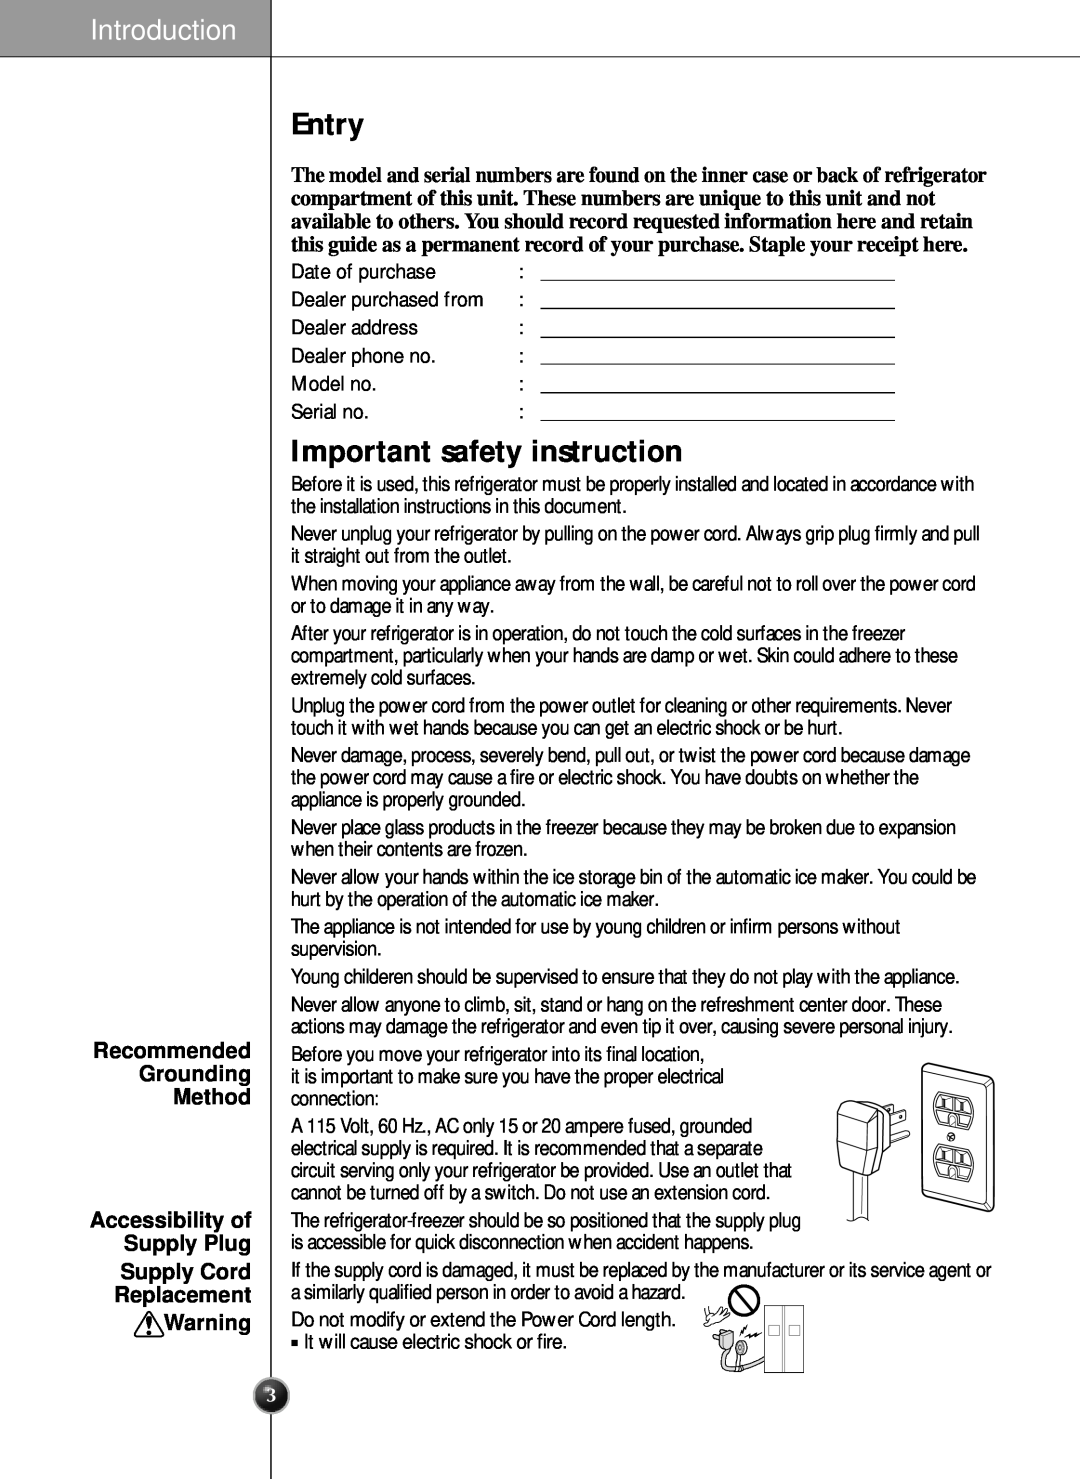 LG Electronics LRSC21935TT, LRSC21935SW, LRSC21935SB manual Entry, Important safety instruction, Introduction 